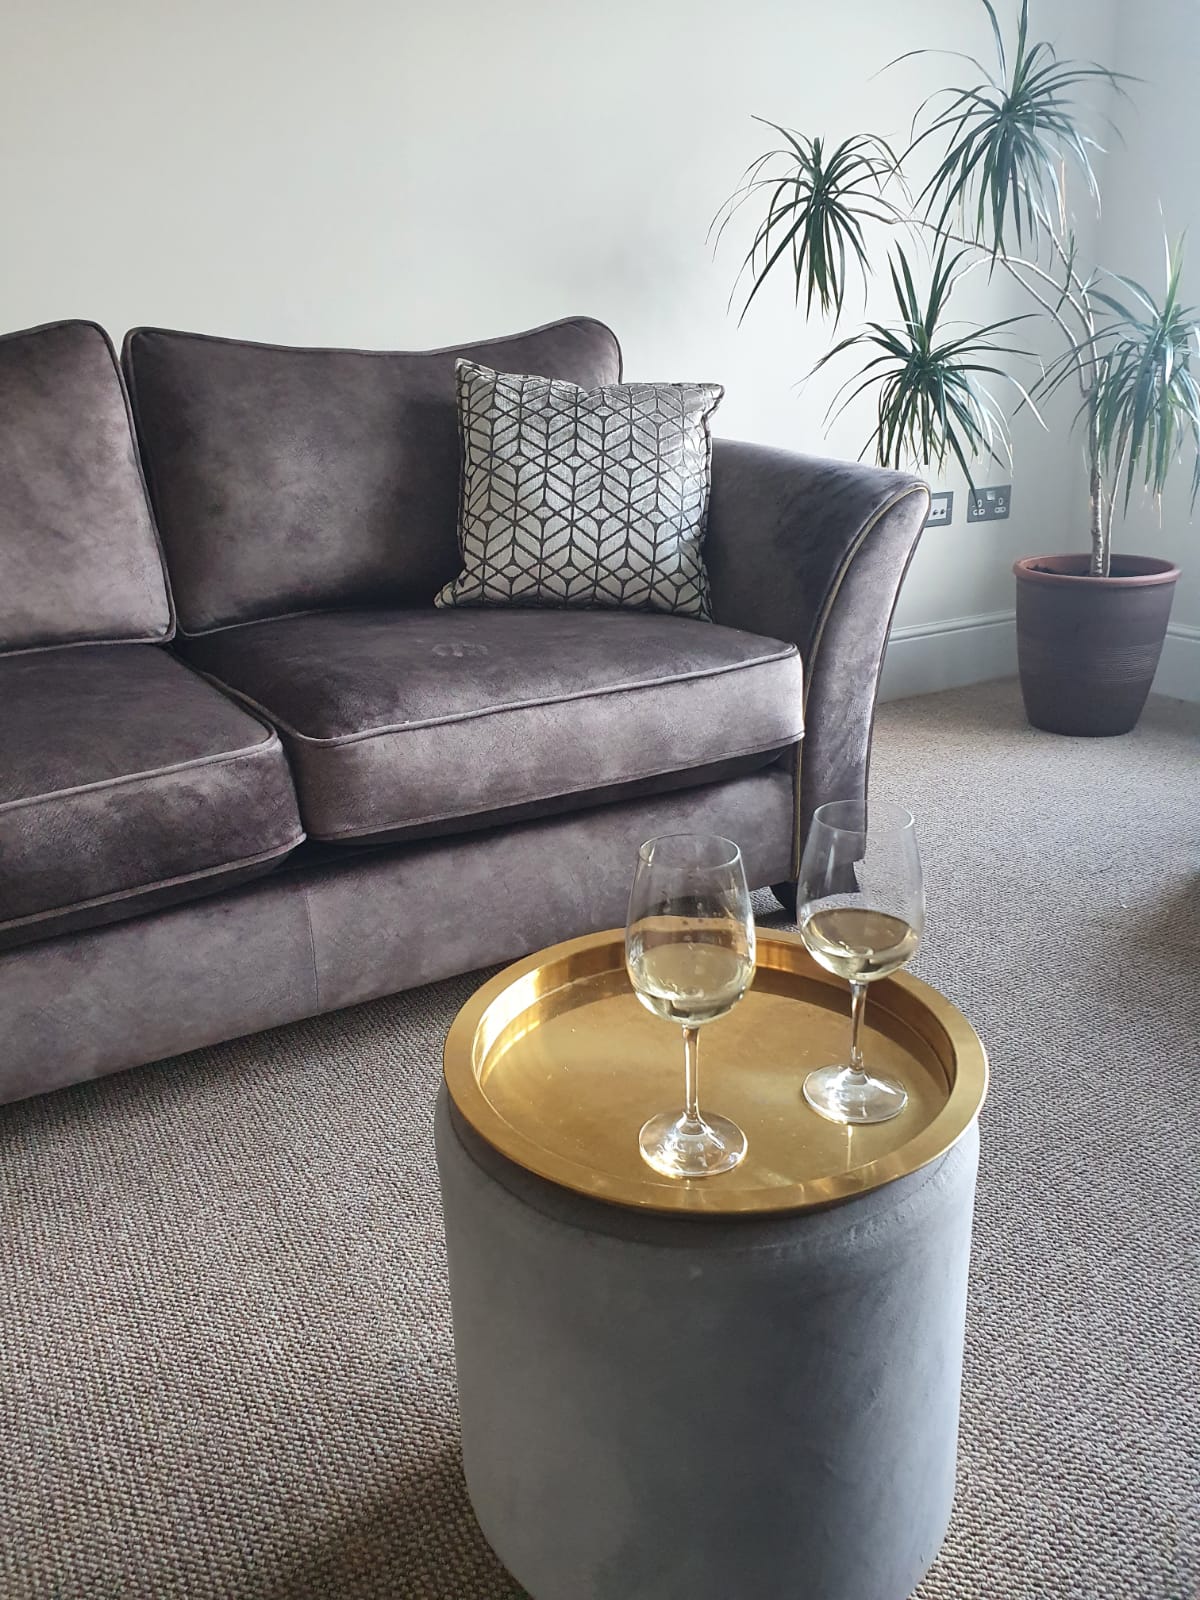 Modern Sofabed for 2021
Amora by Furniture Village